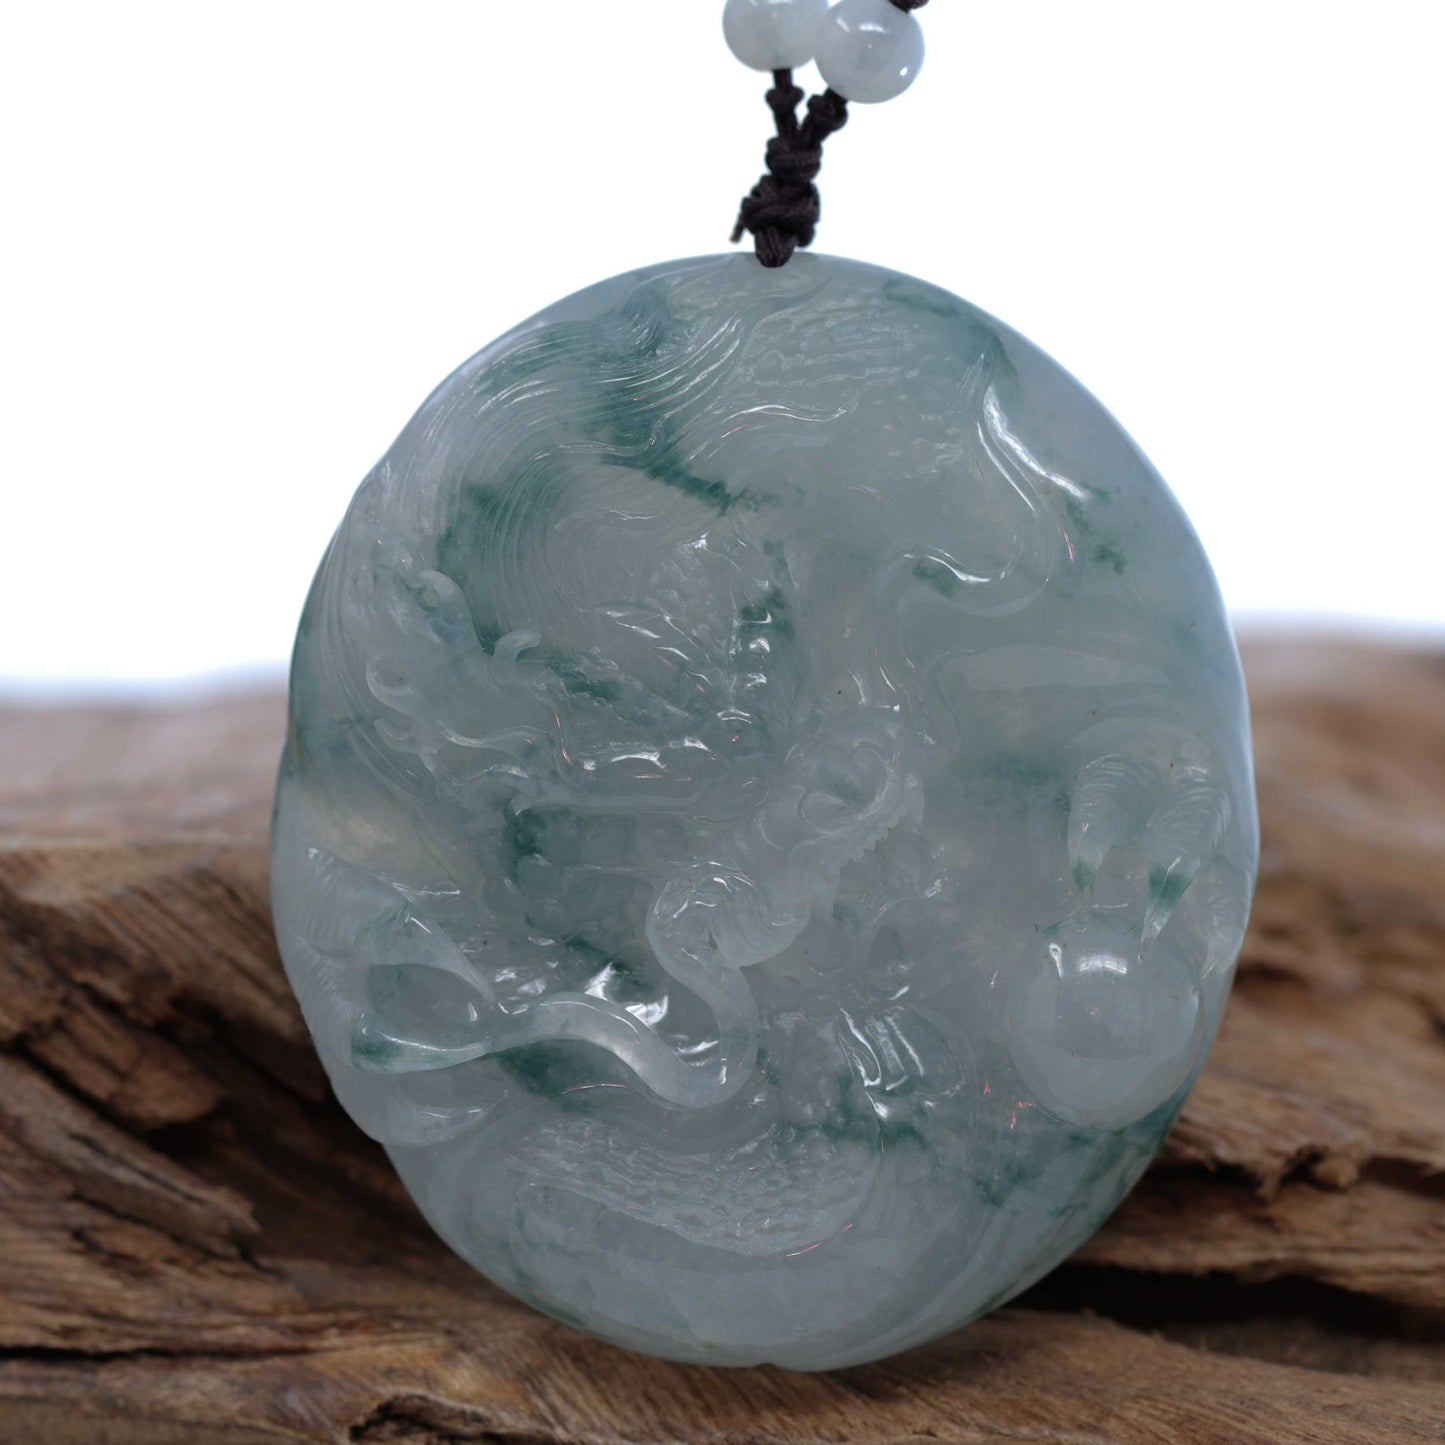 RealJade Co. "Soring Dragon" Natural Jadeite Jade Blue Green Pendant Necklace For Men, Collectibles.